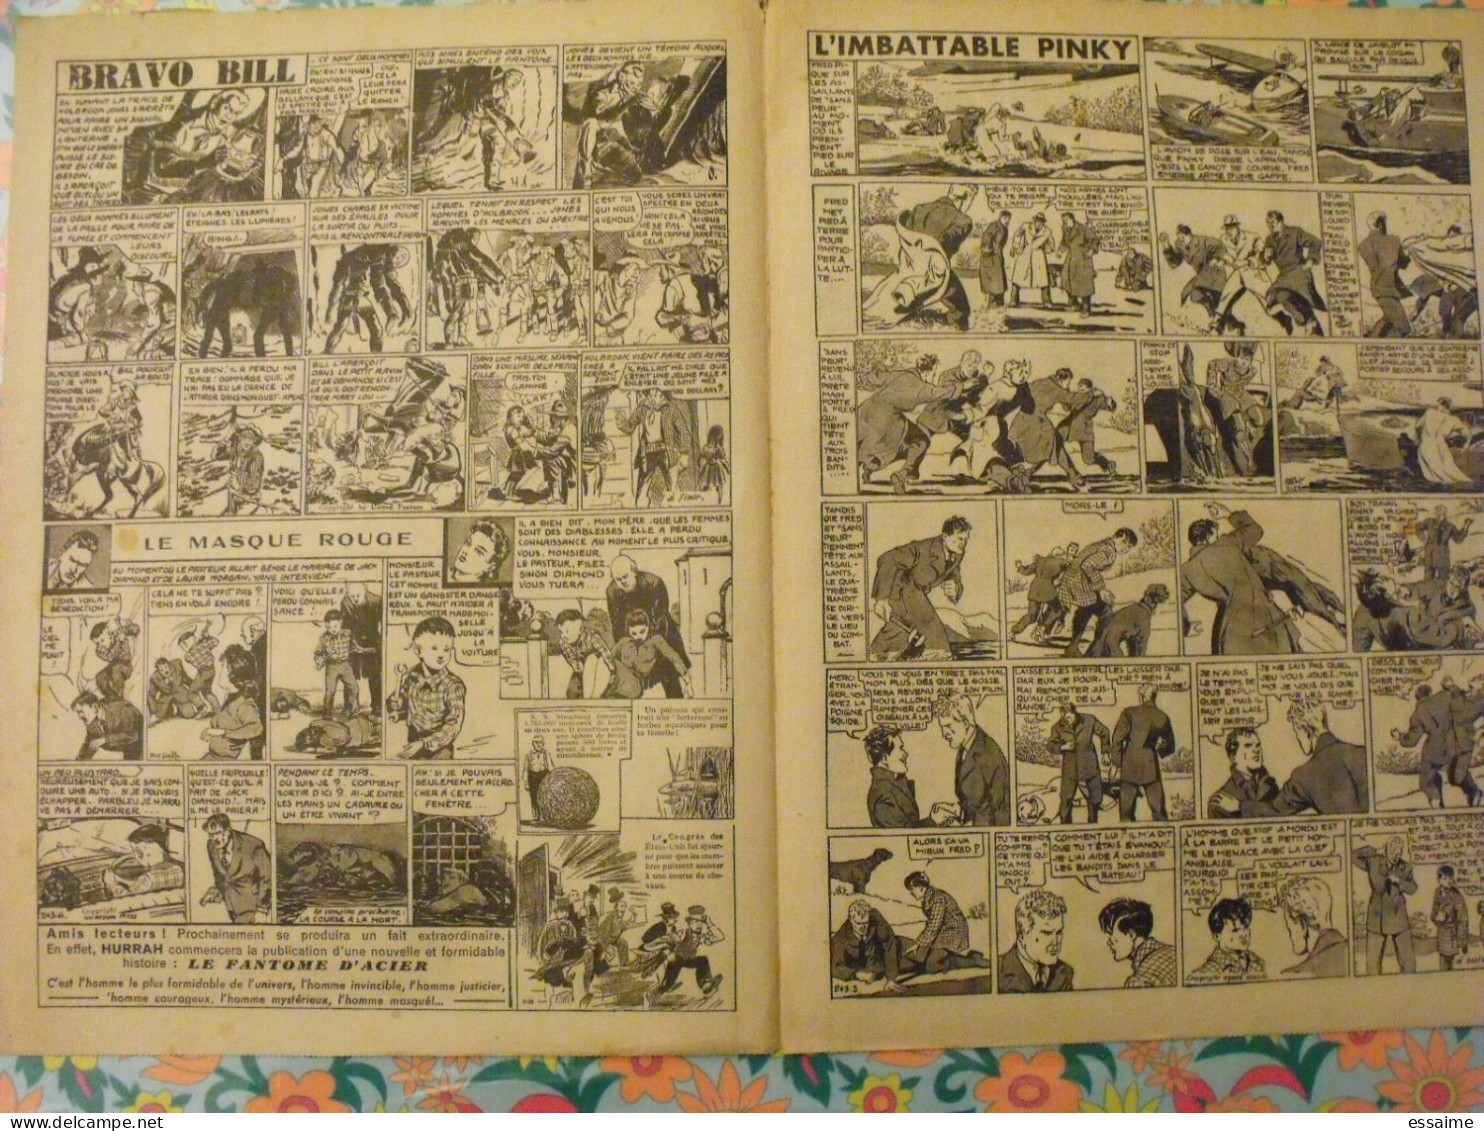 5 n° de Hurrah ! de 1939-40. Brick Bradford, Tarzan, le roi de la police montée, gordon. A redécouvrir